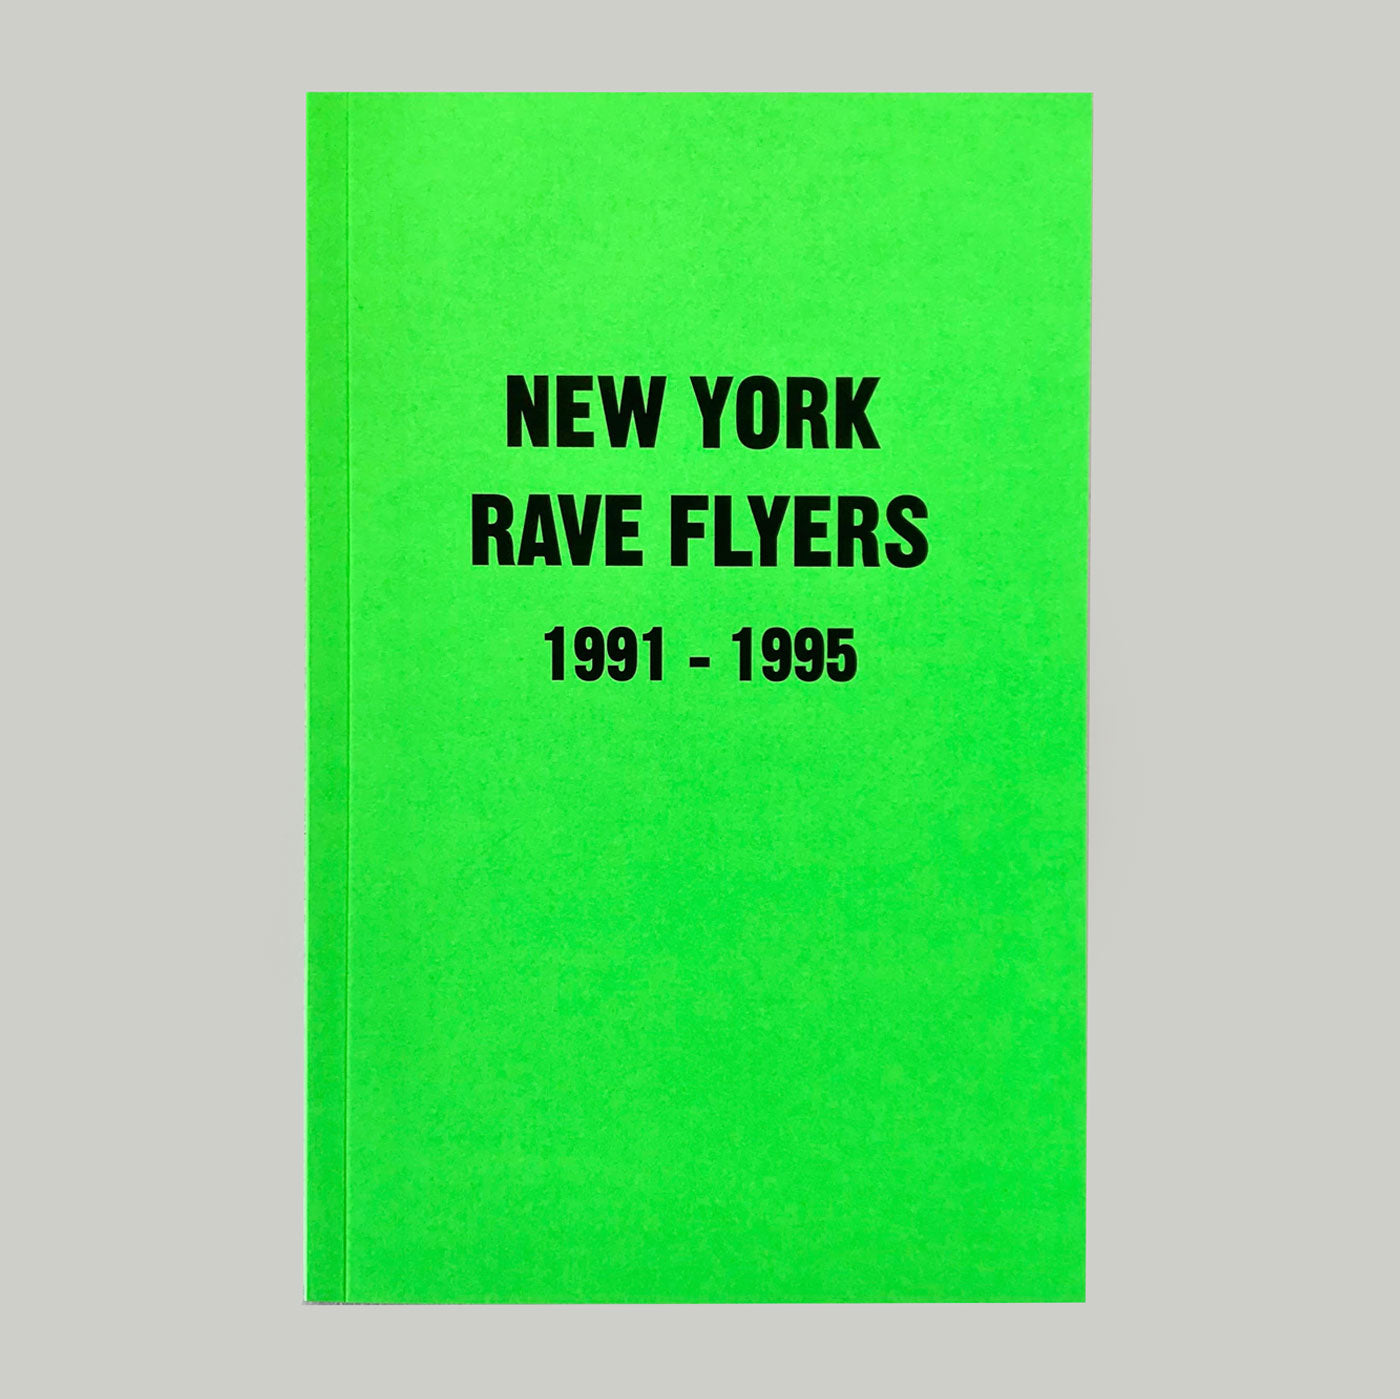 New York Rave Flyers 1991-1995 by Ernie Villalobos